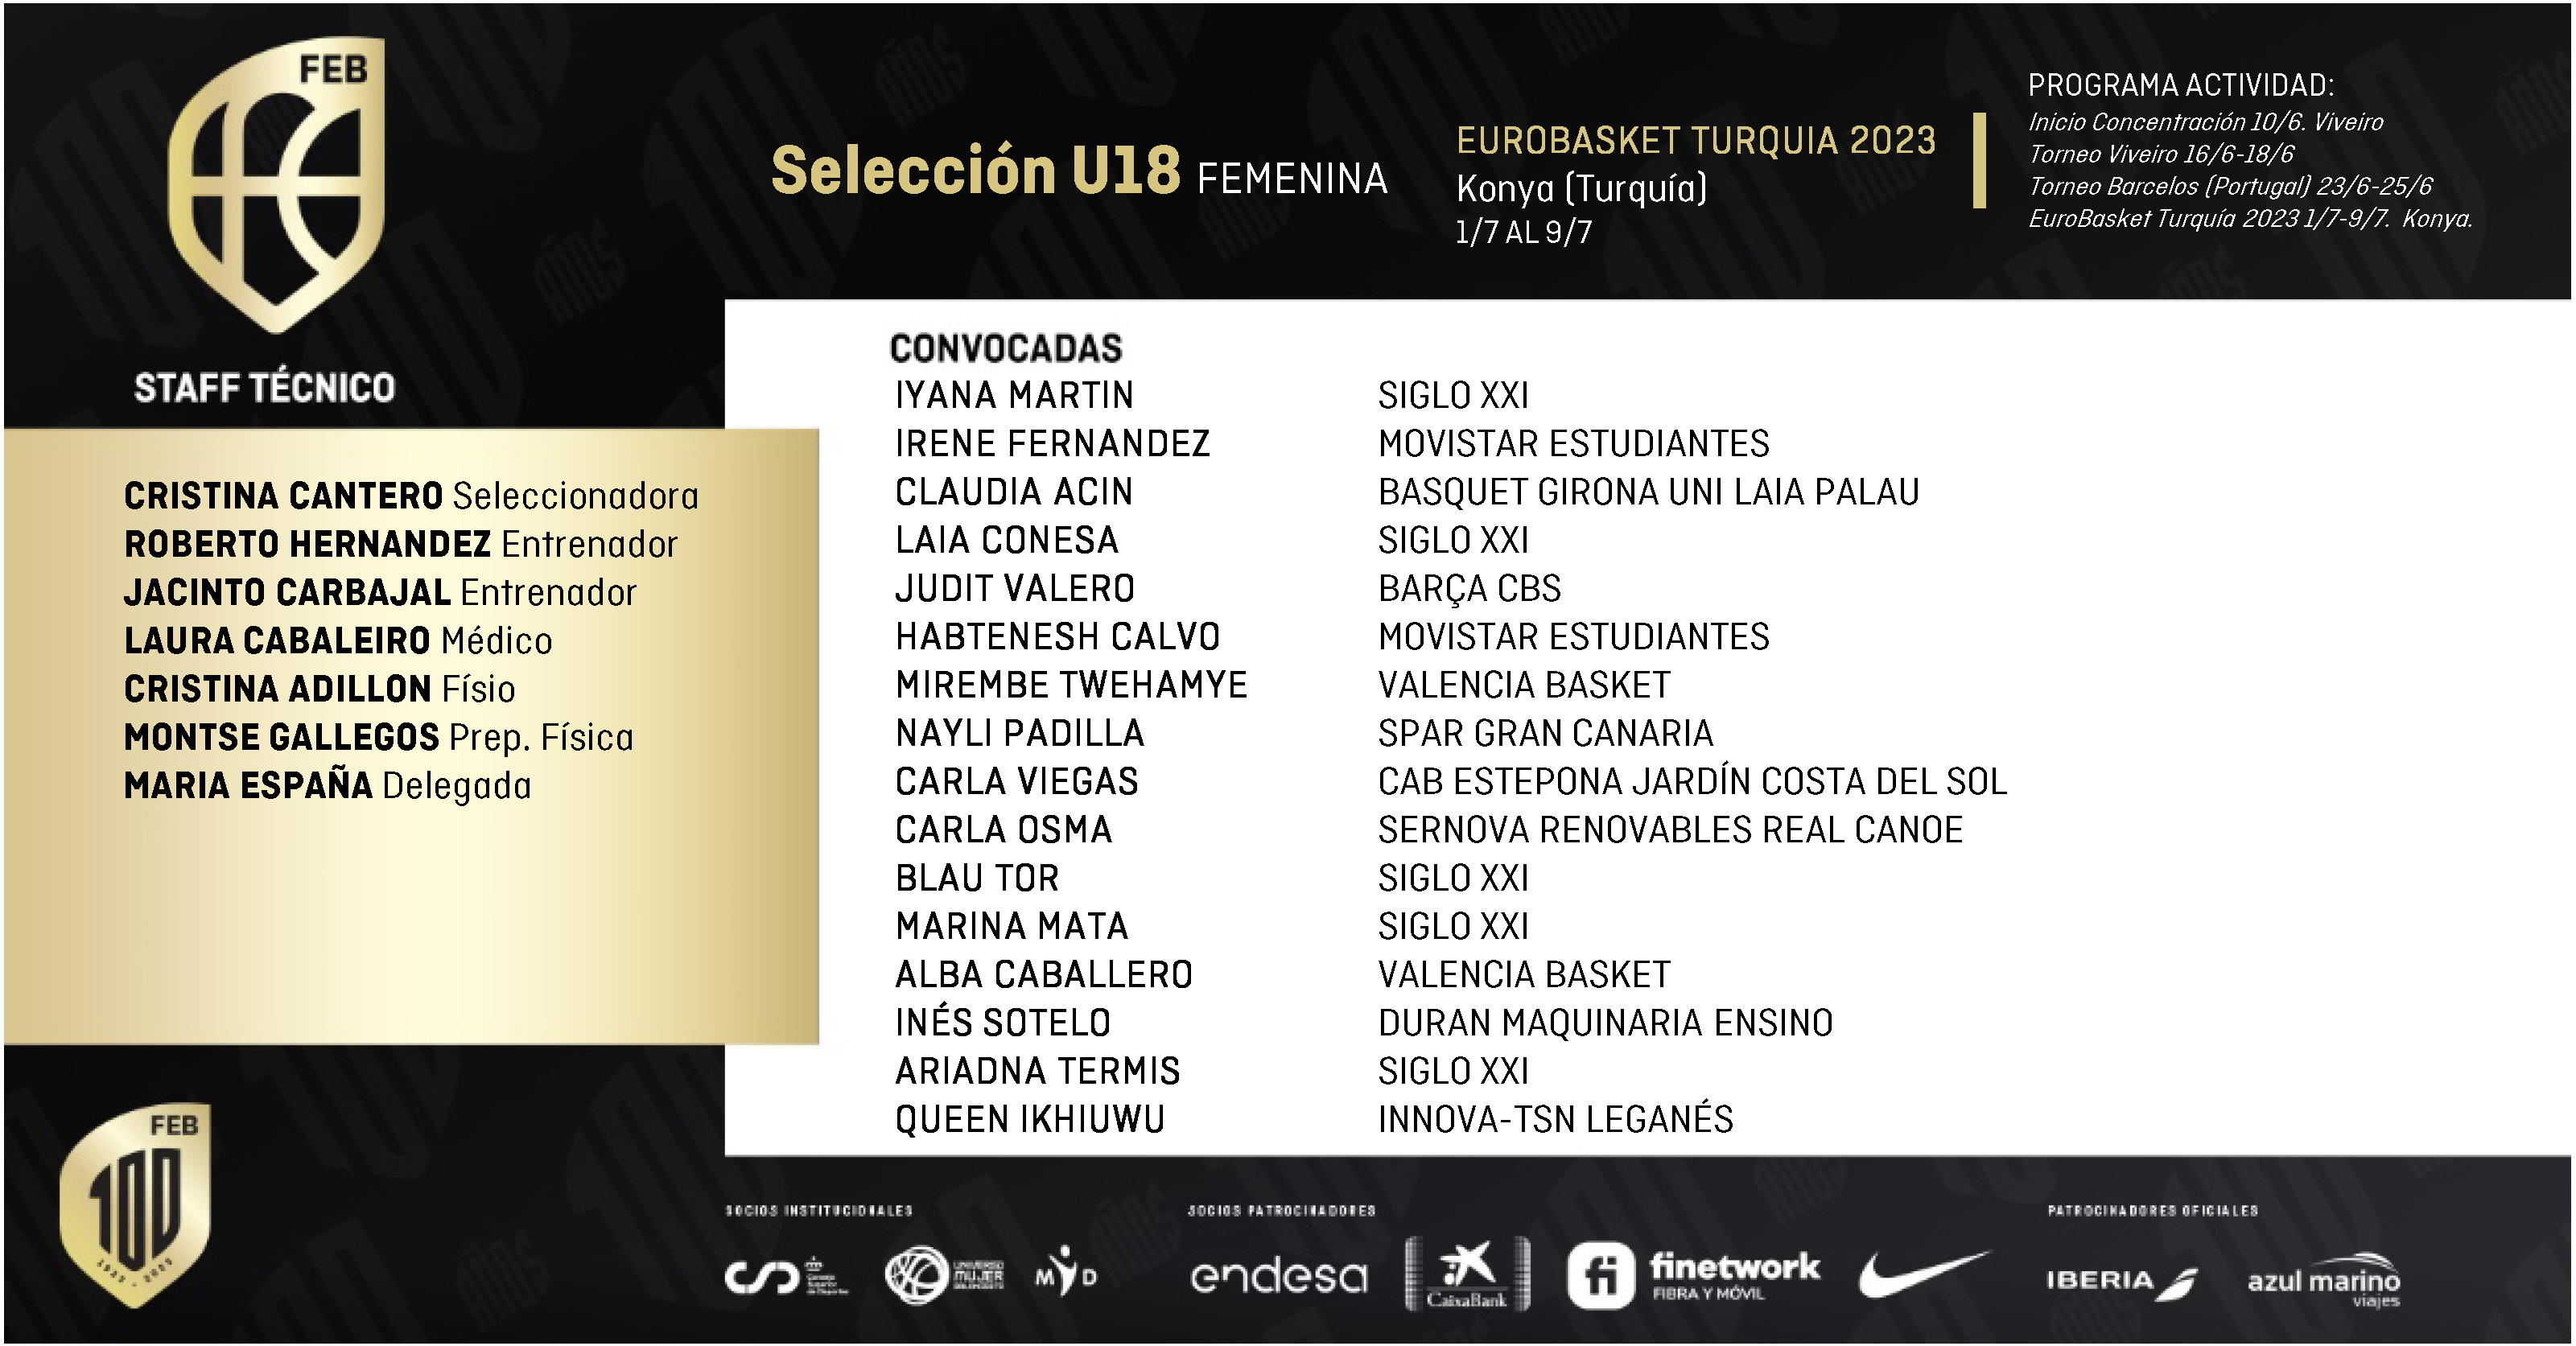 Convocatoria U18 Femenina. Eurobasket Turquía 2023 (Konya)